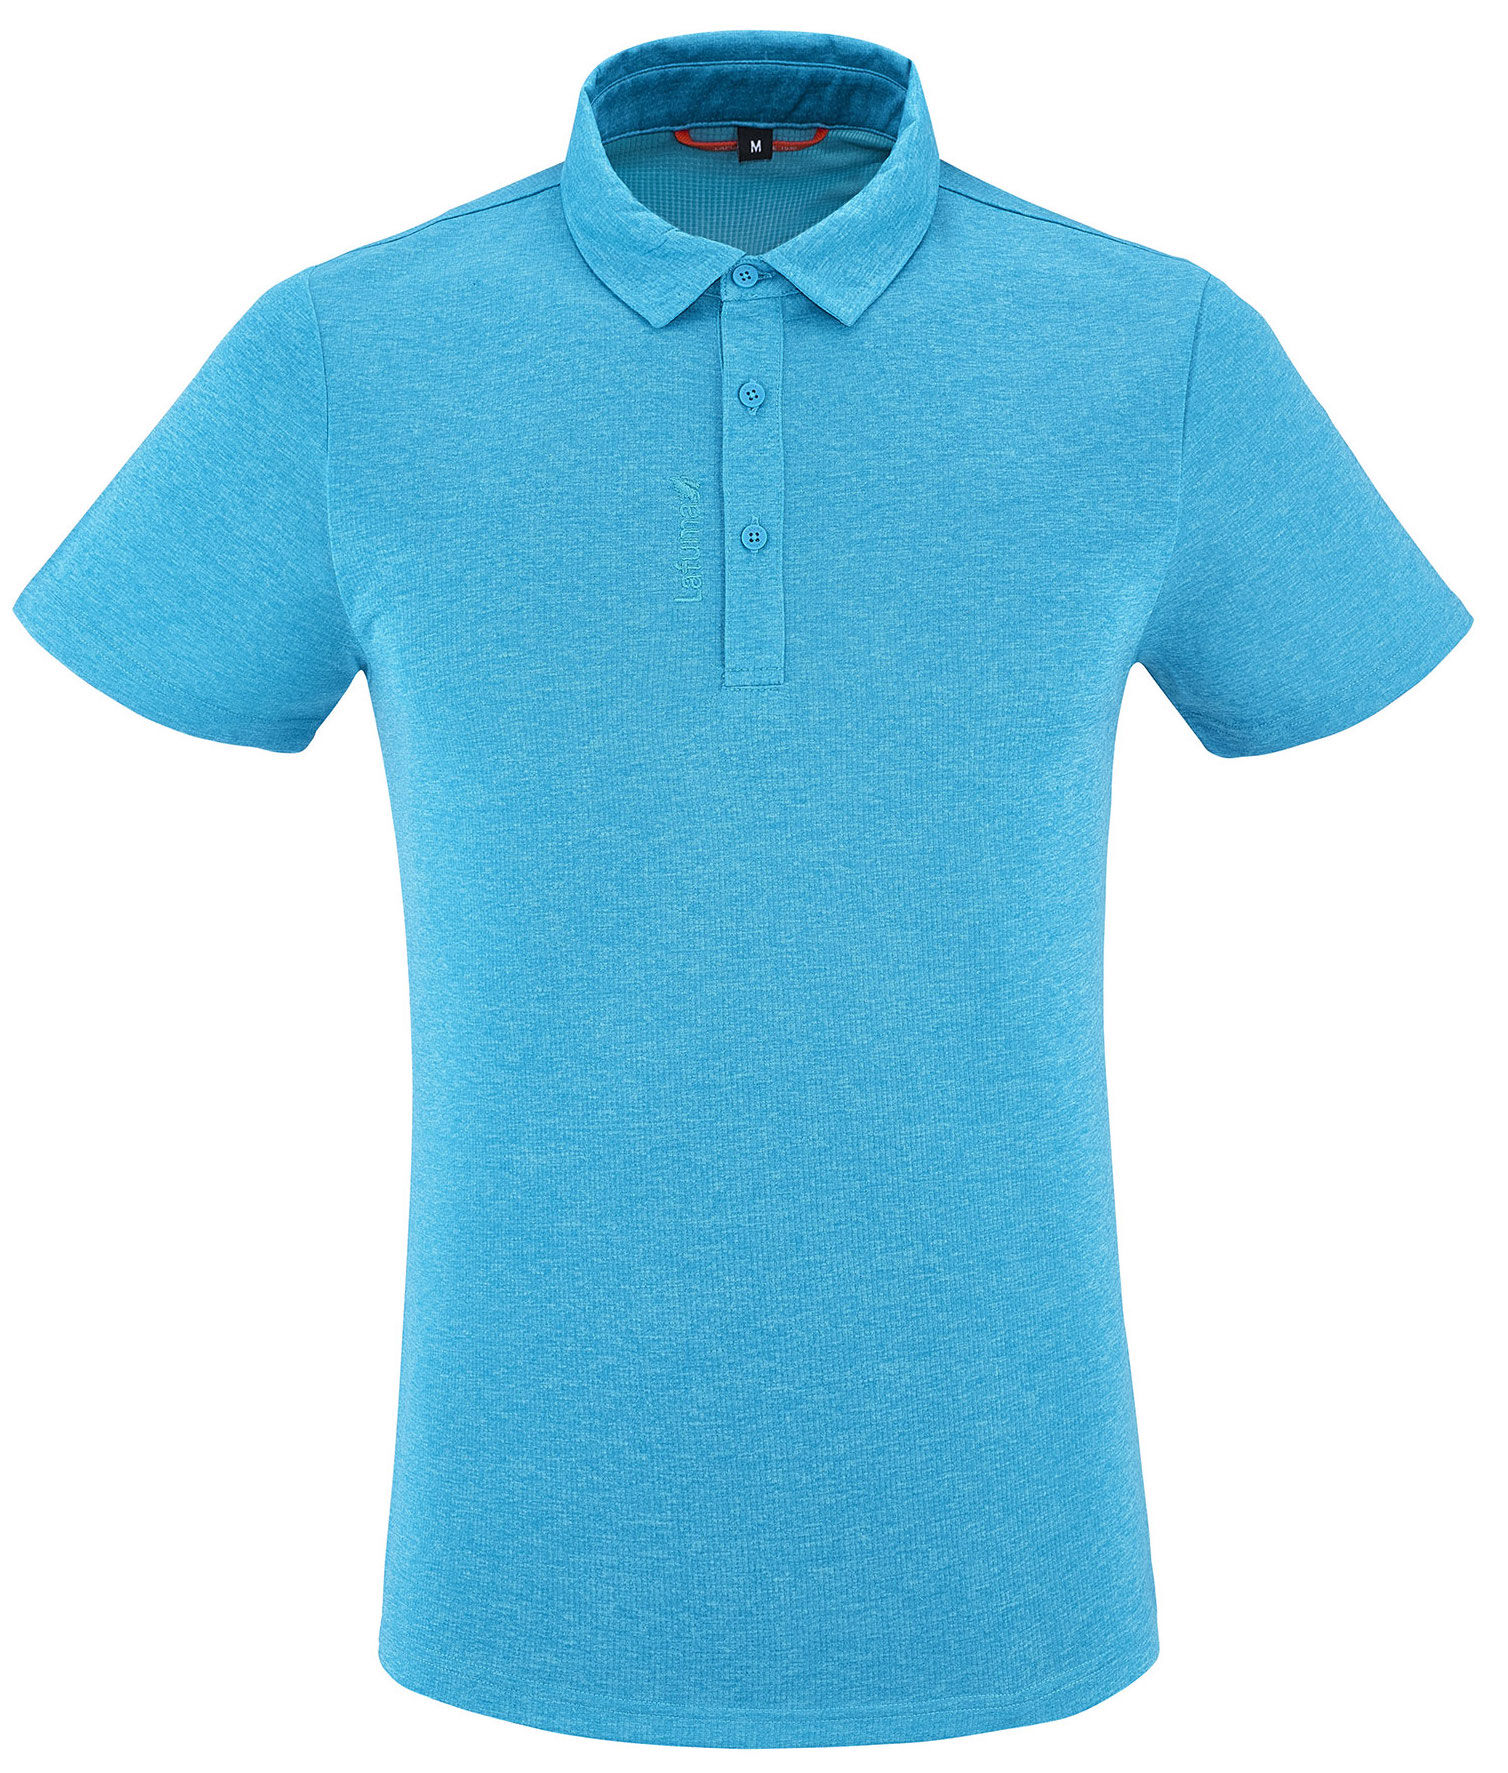 Lafuma - Shift Polo - Polo shirt - Men's